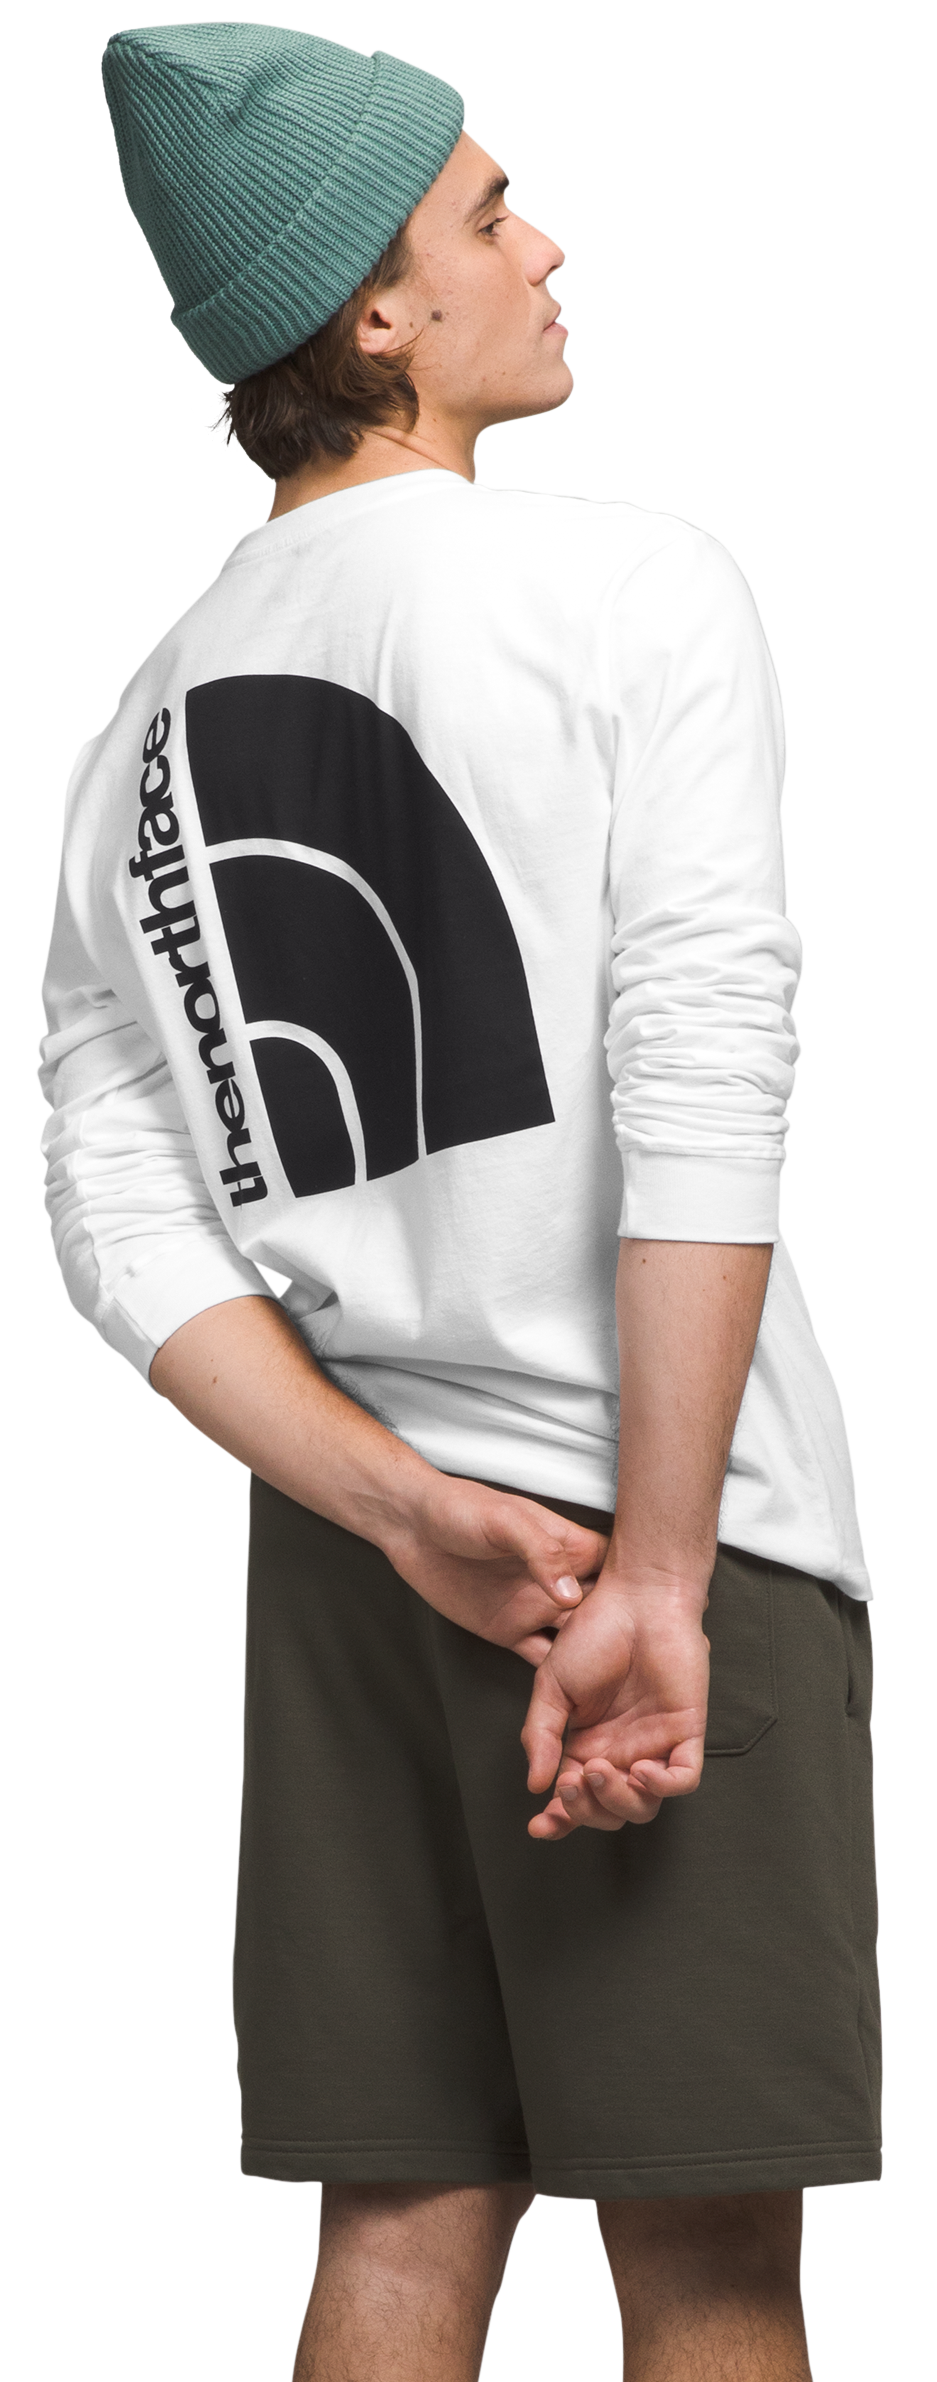 The North Face Jumbo Half Dome Long-Sleeve T-Shirt for Men - TNF White/TNF Black - XL